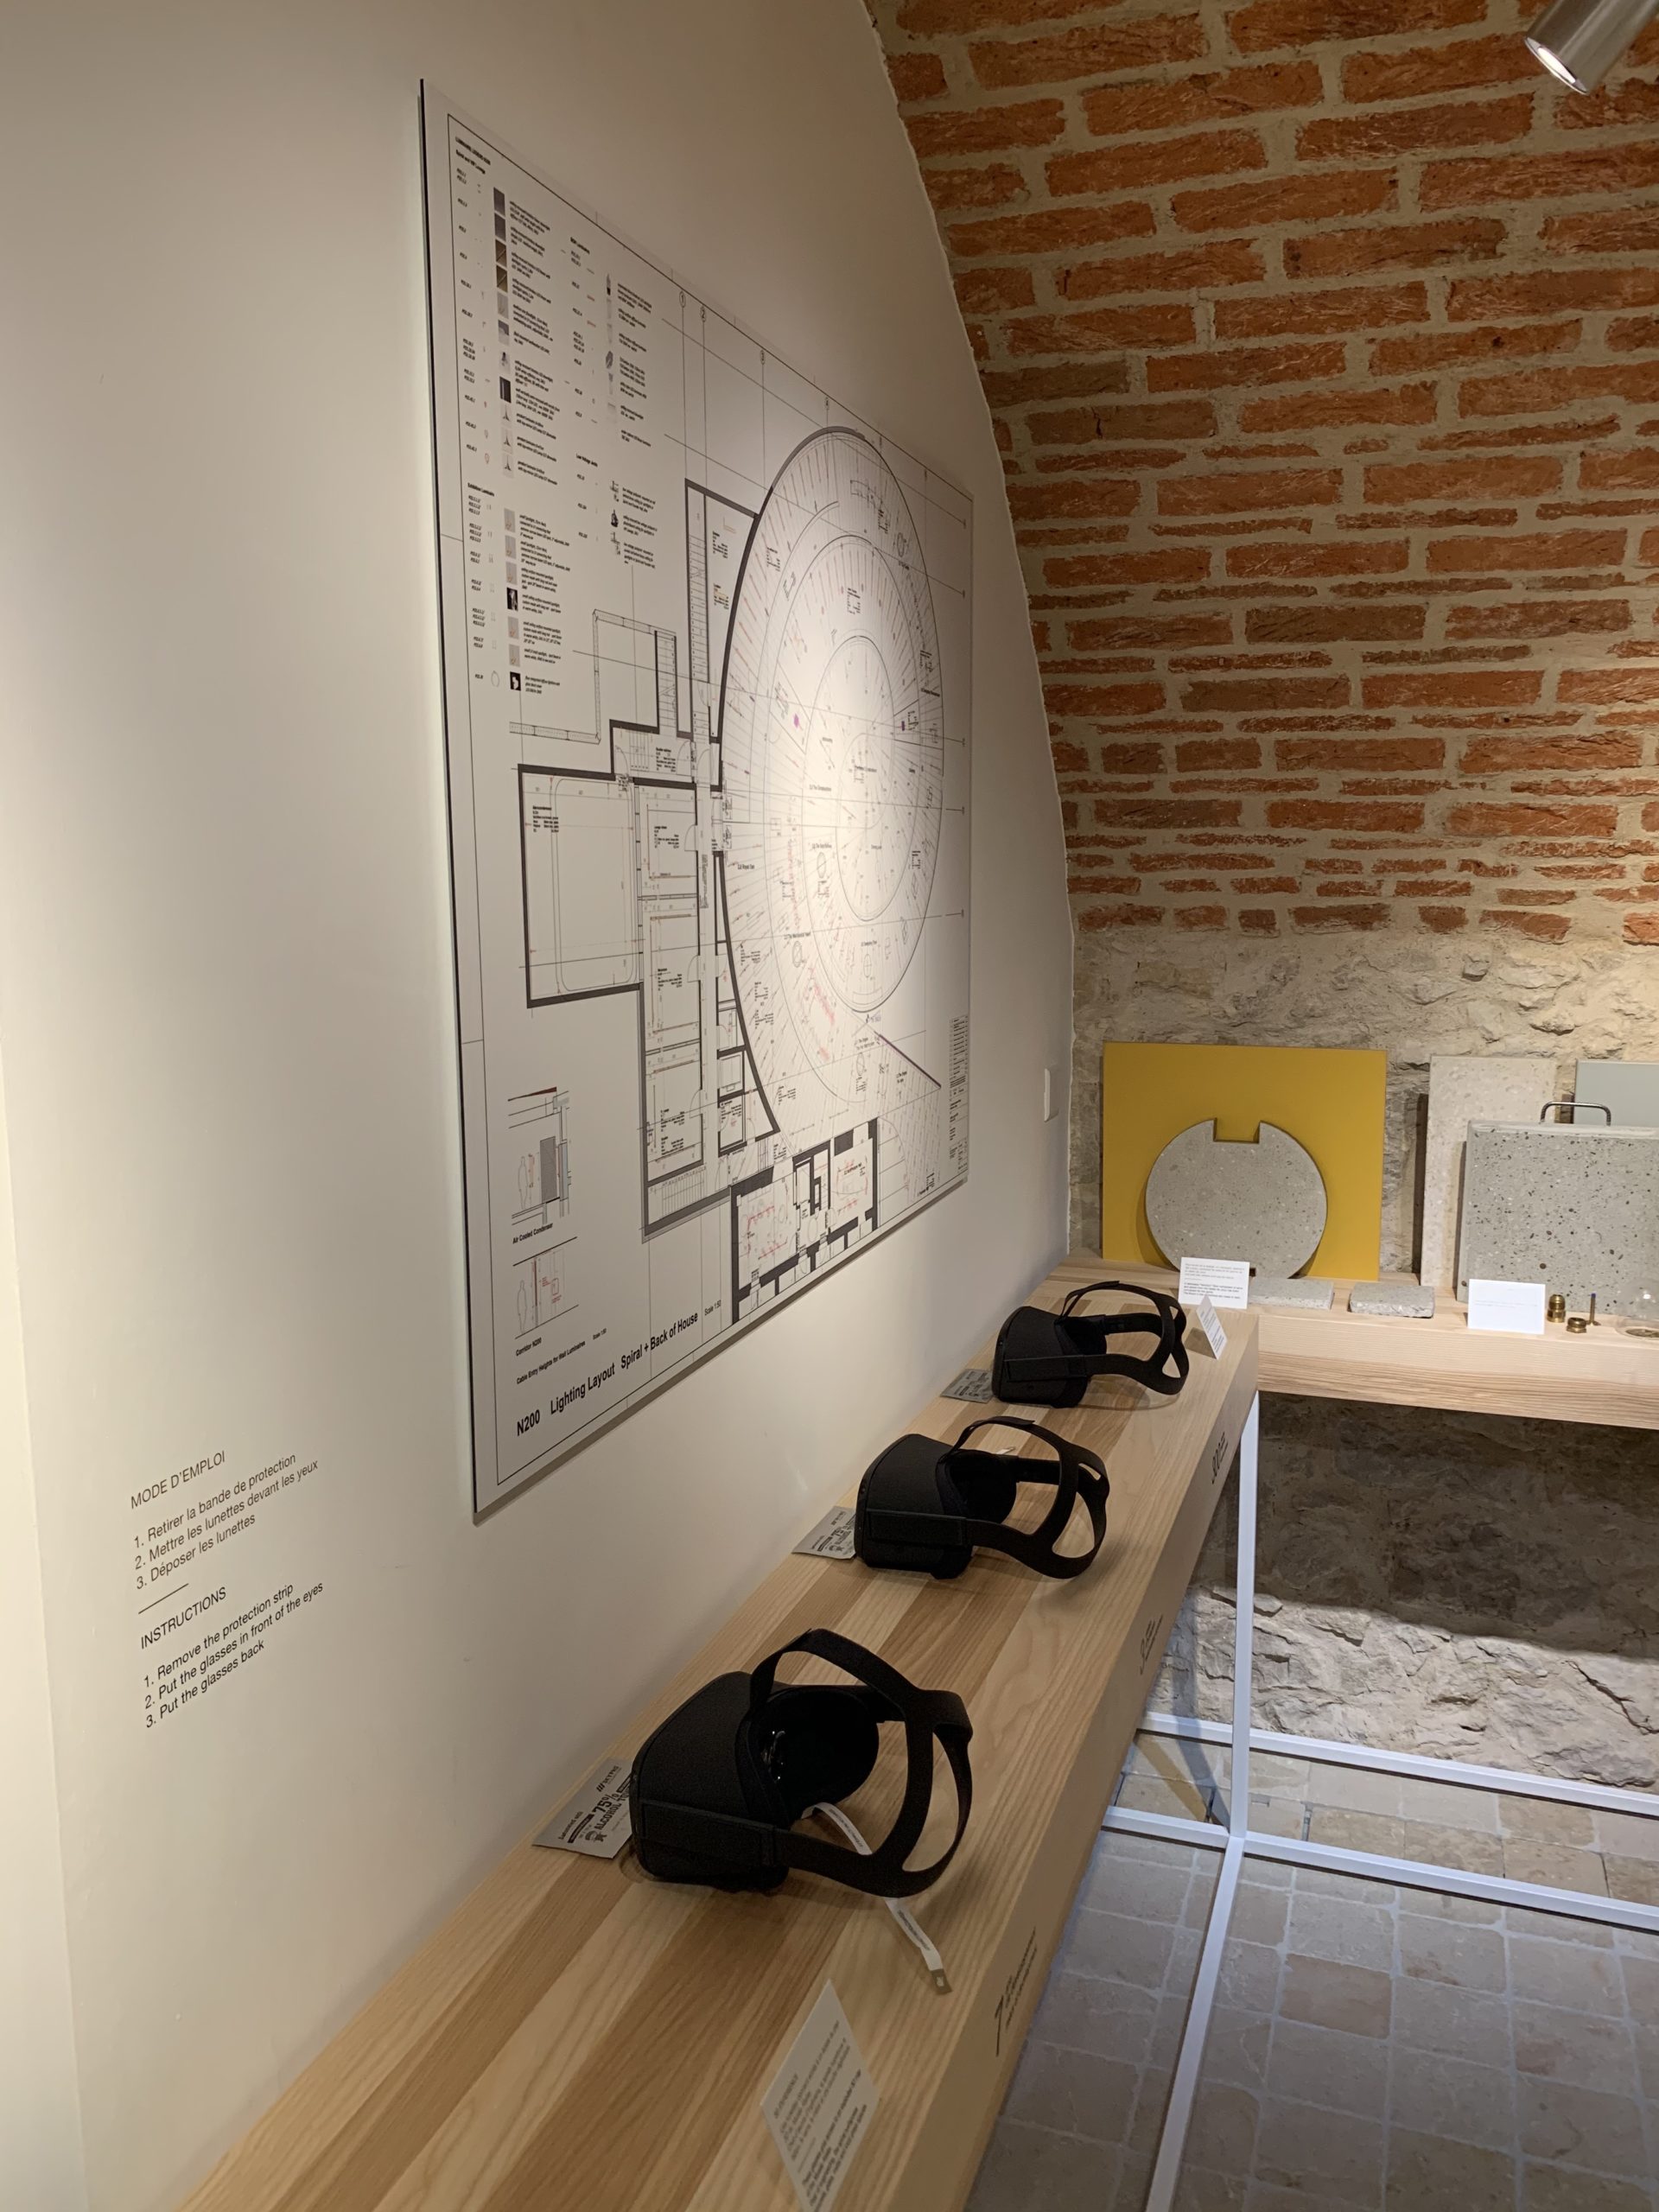 AP building VR exhibit